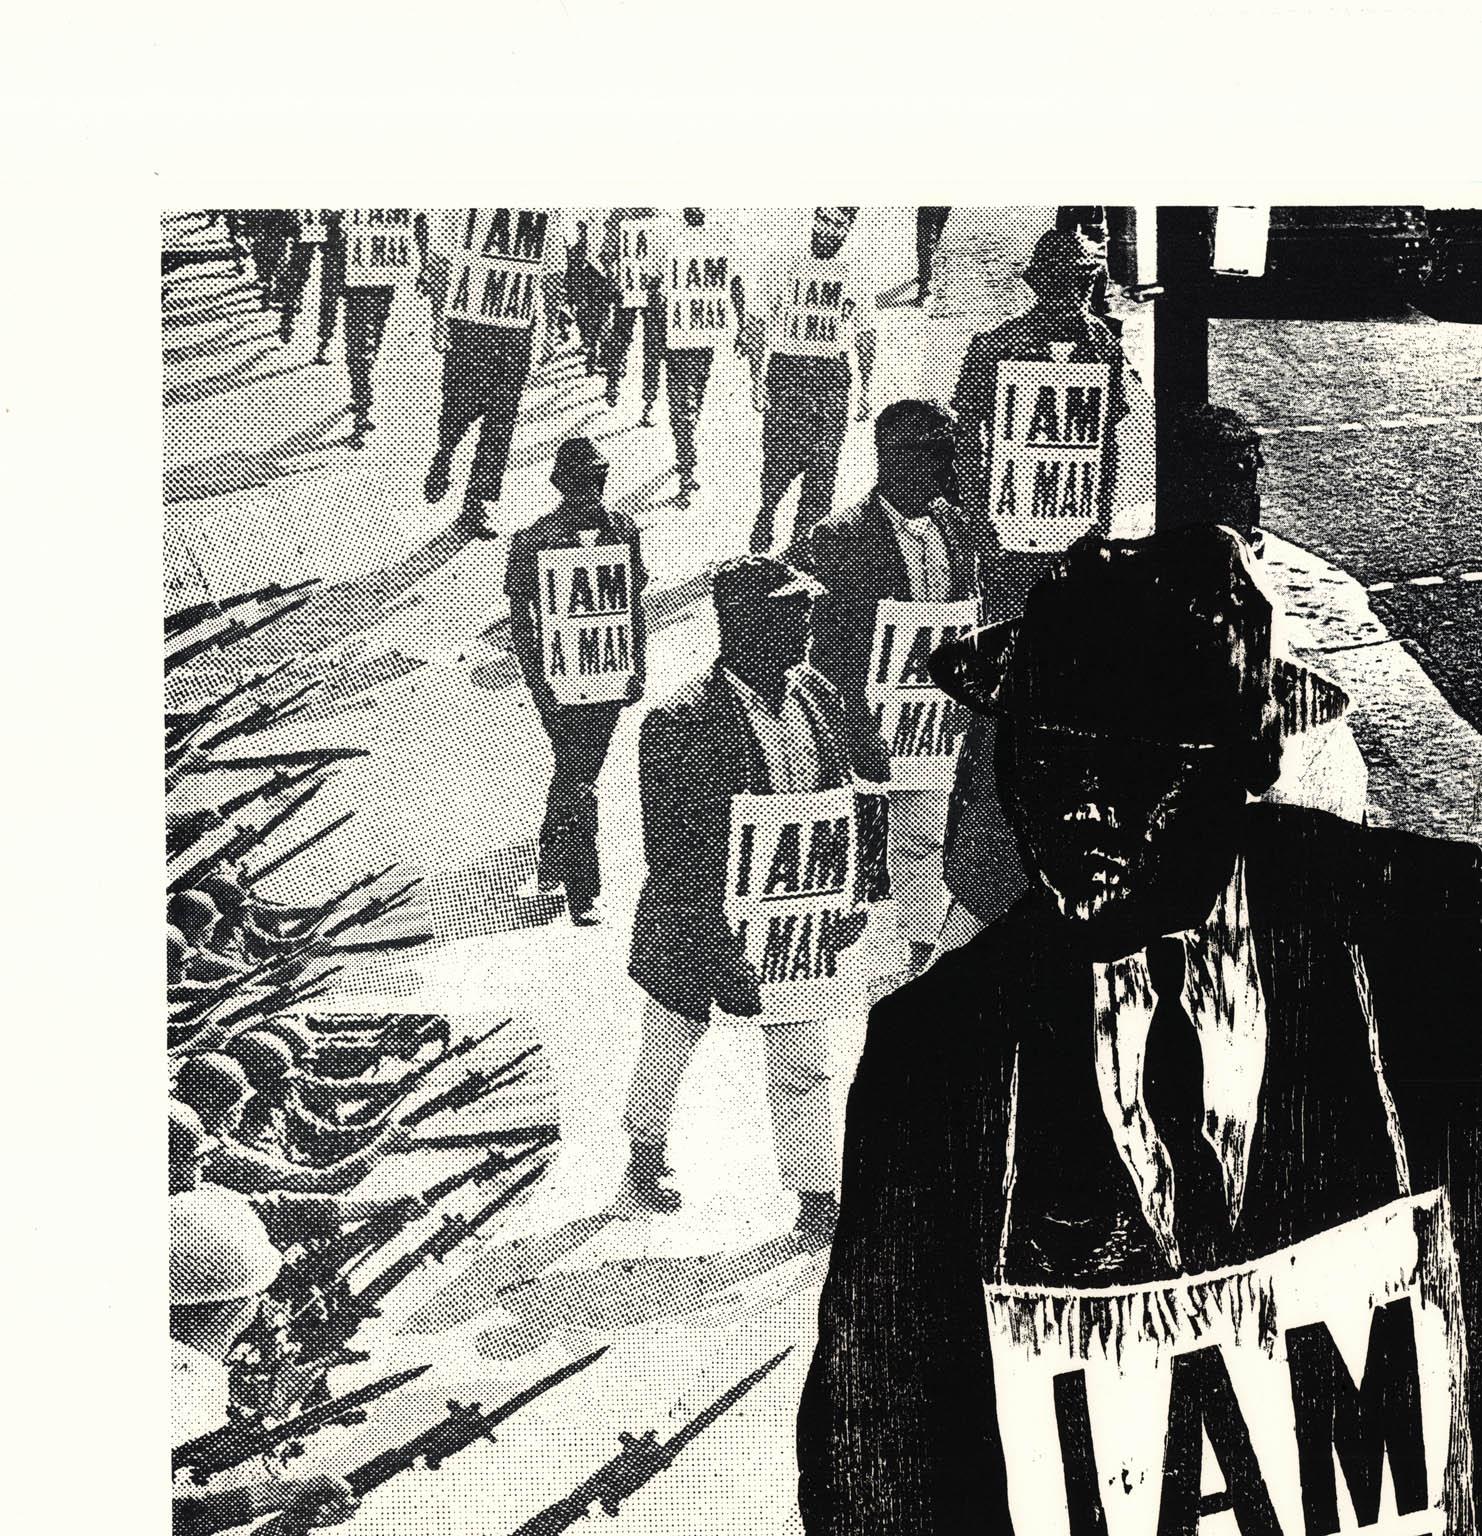 Sanitation Workers, Memphis, 1968 - Contemporary Print by Antonio Frasconi